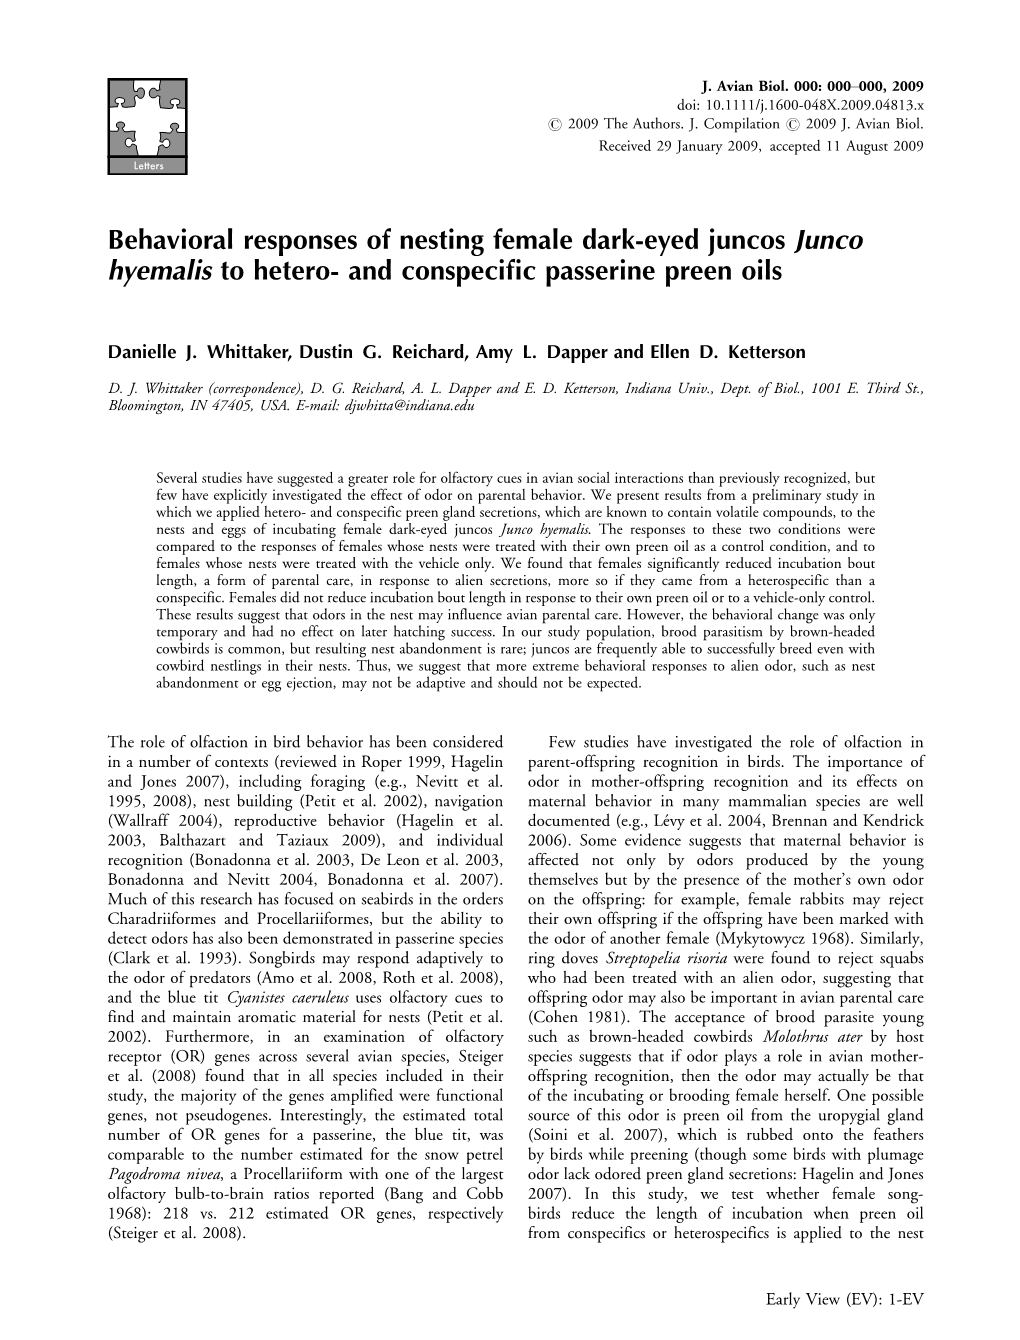 Behavioral Responses of Nesting Female Dark-Eyed Juncos Junco Hyemalis to Hetero- and Conspecific Passerine Preen Oils